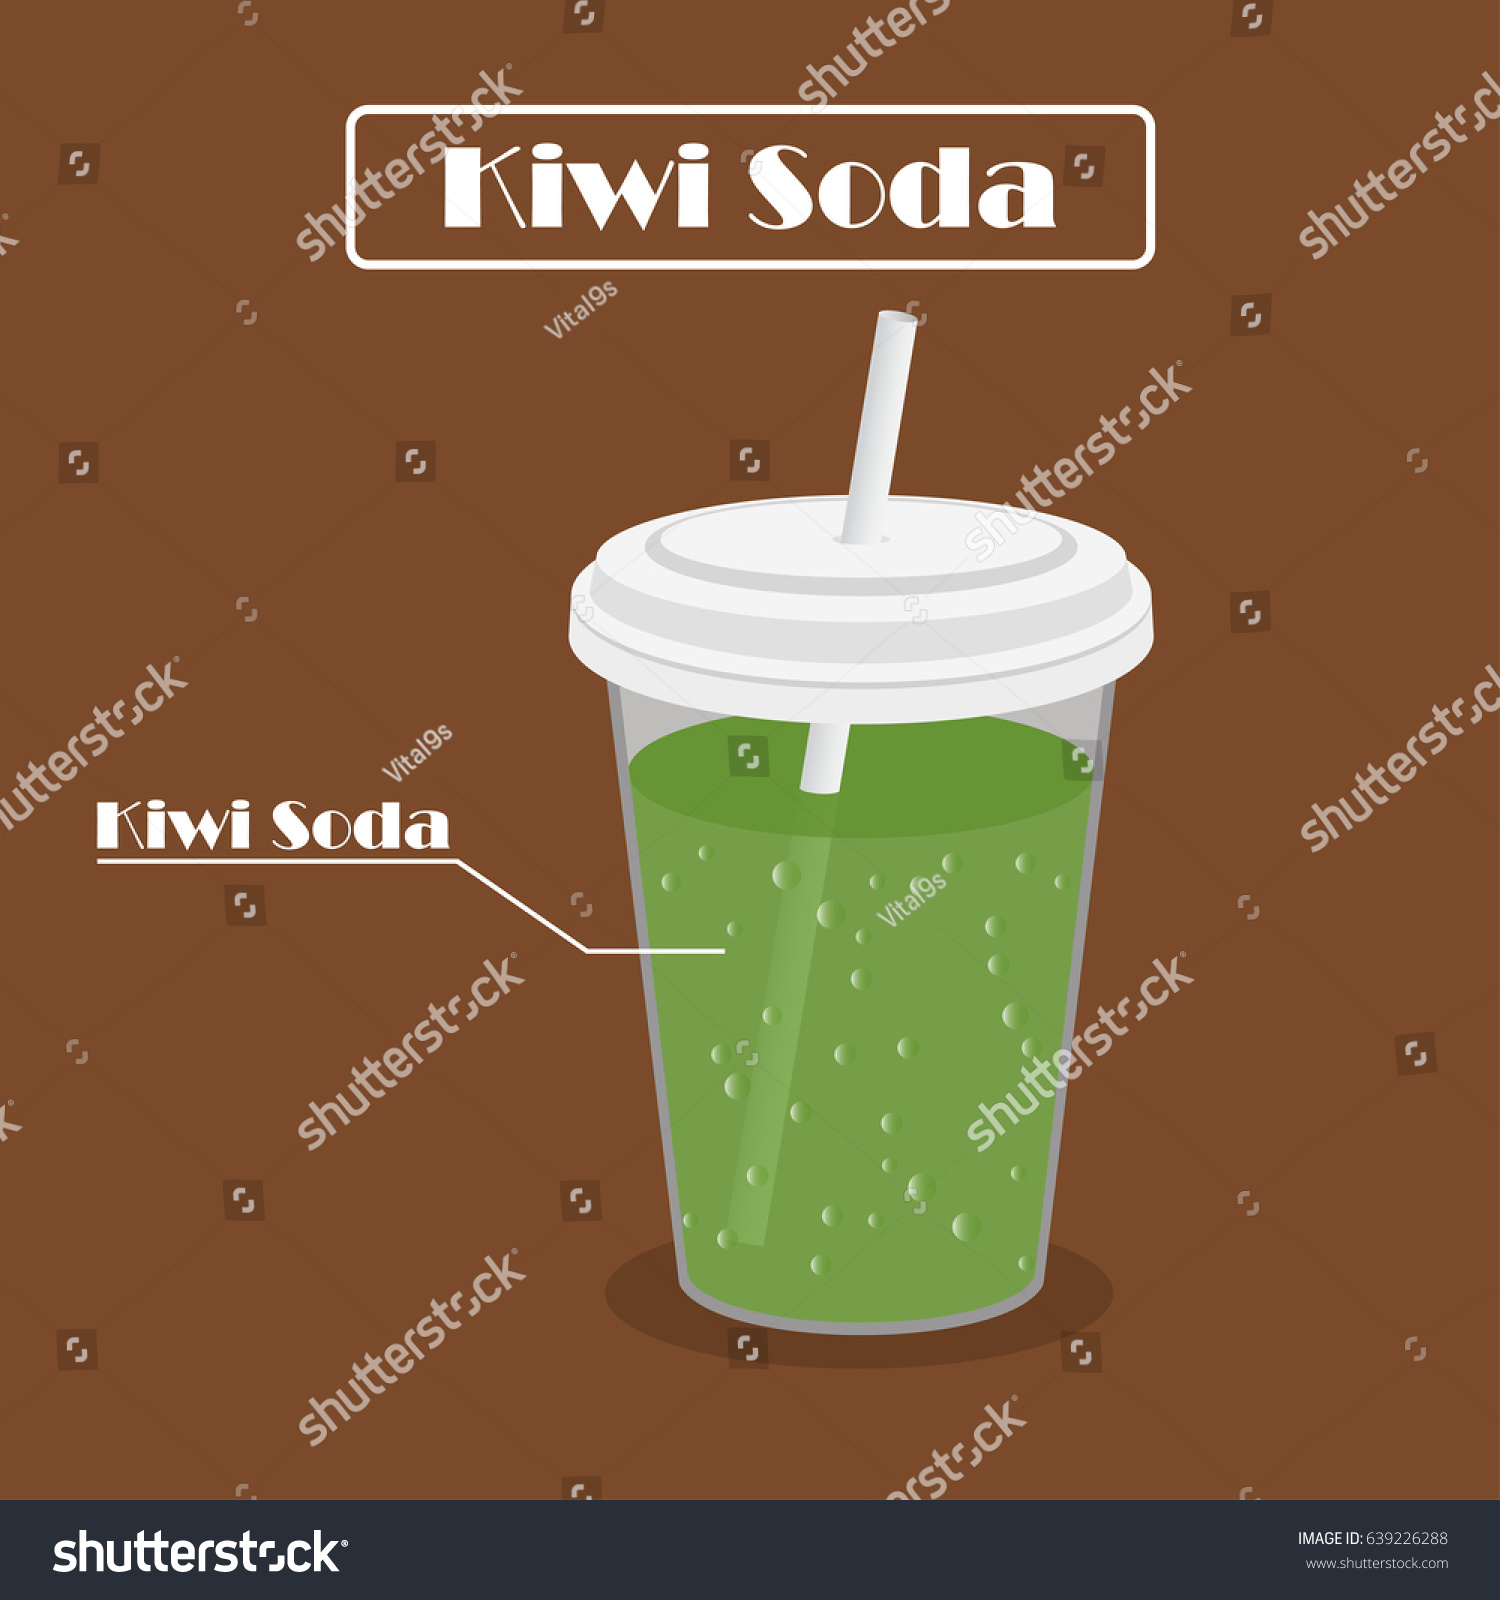 Kiwi Soda Cup Stock Illustration 639226288 - Shutterstock